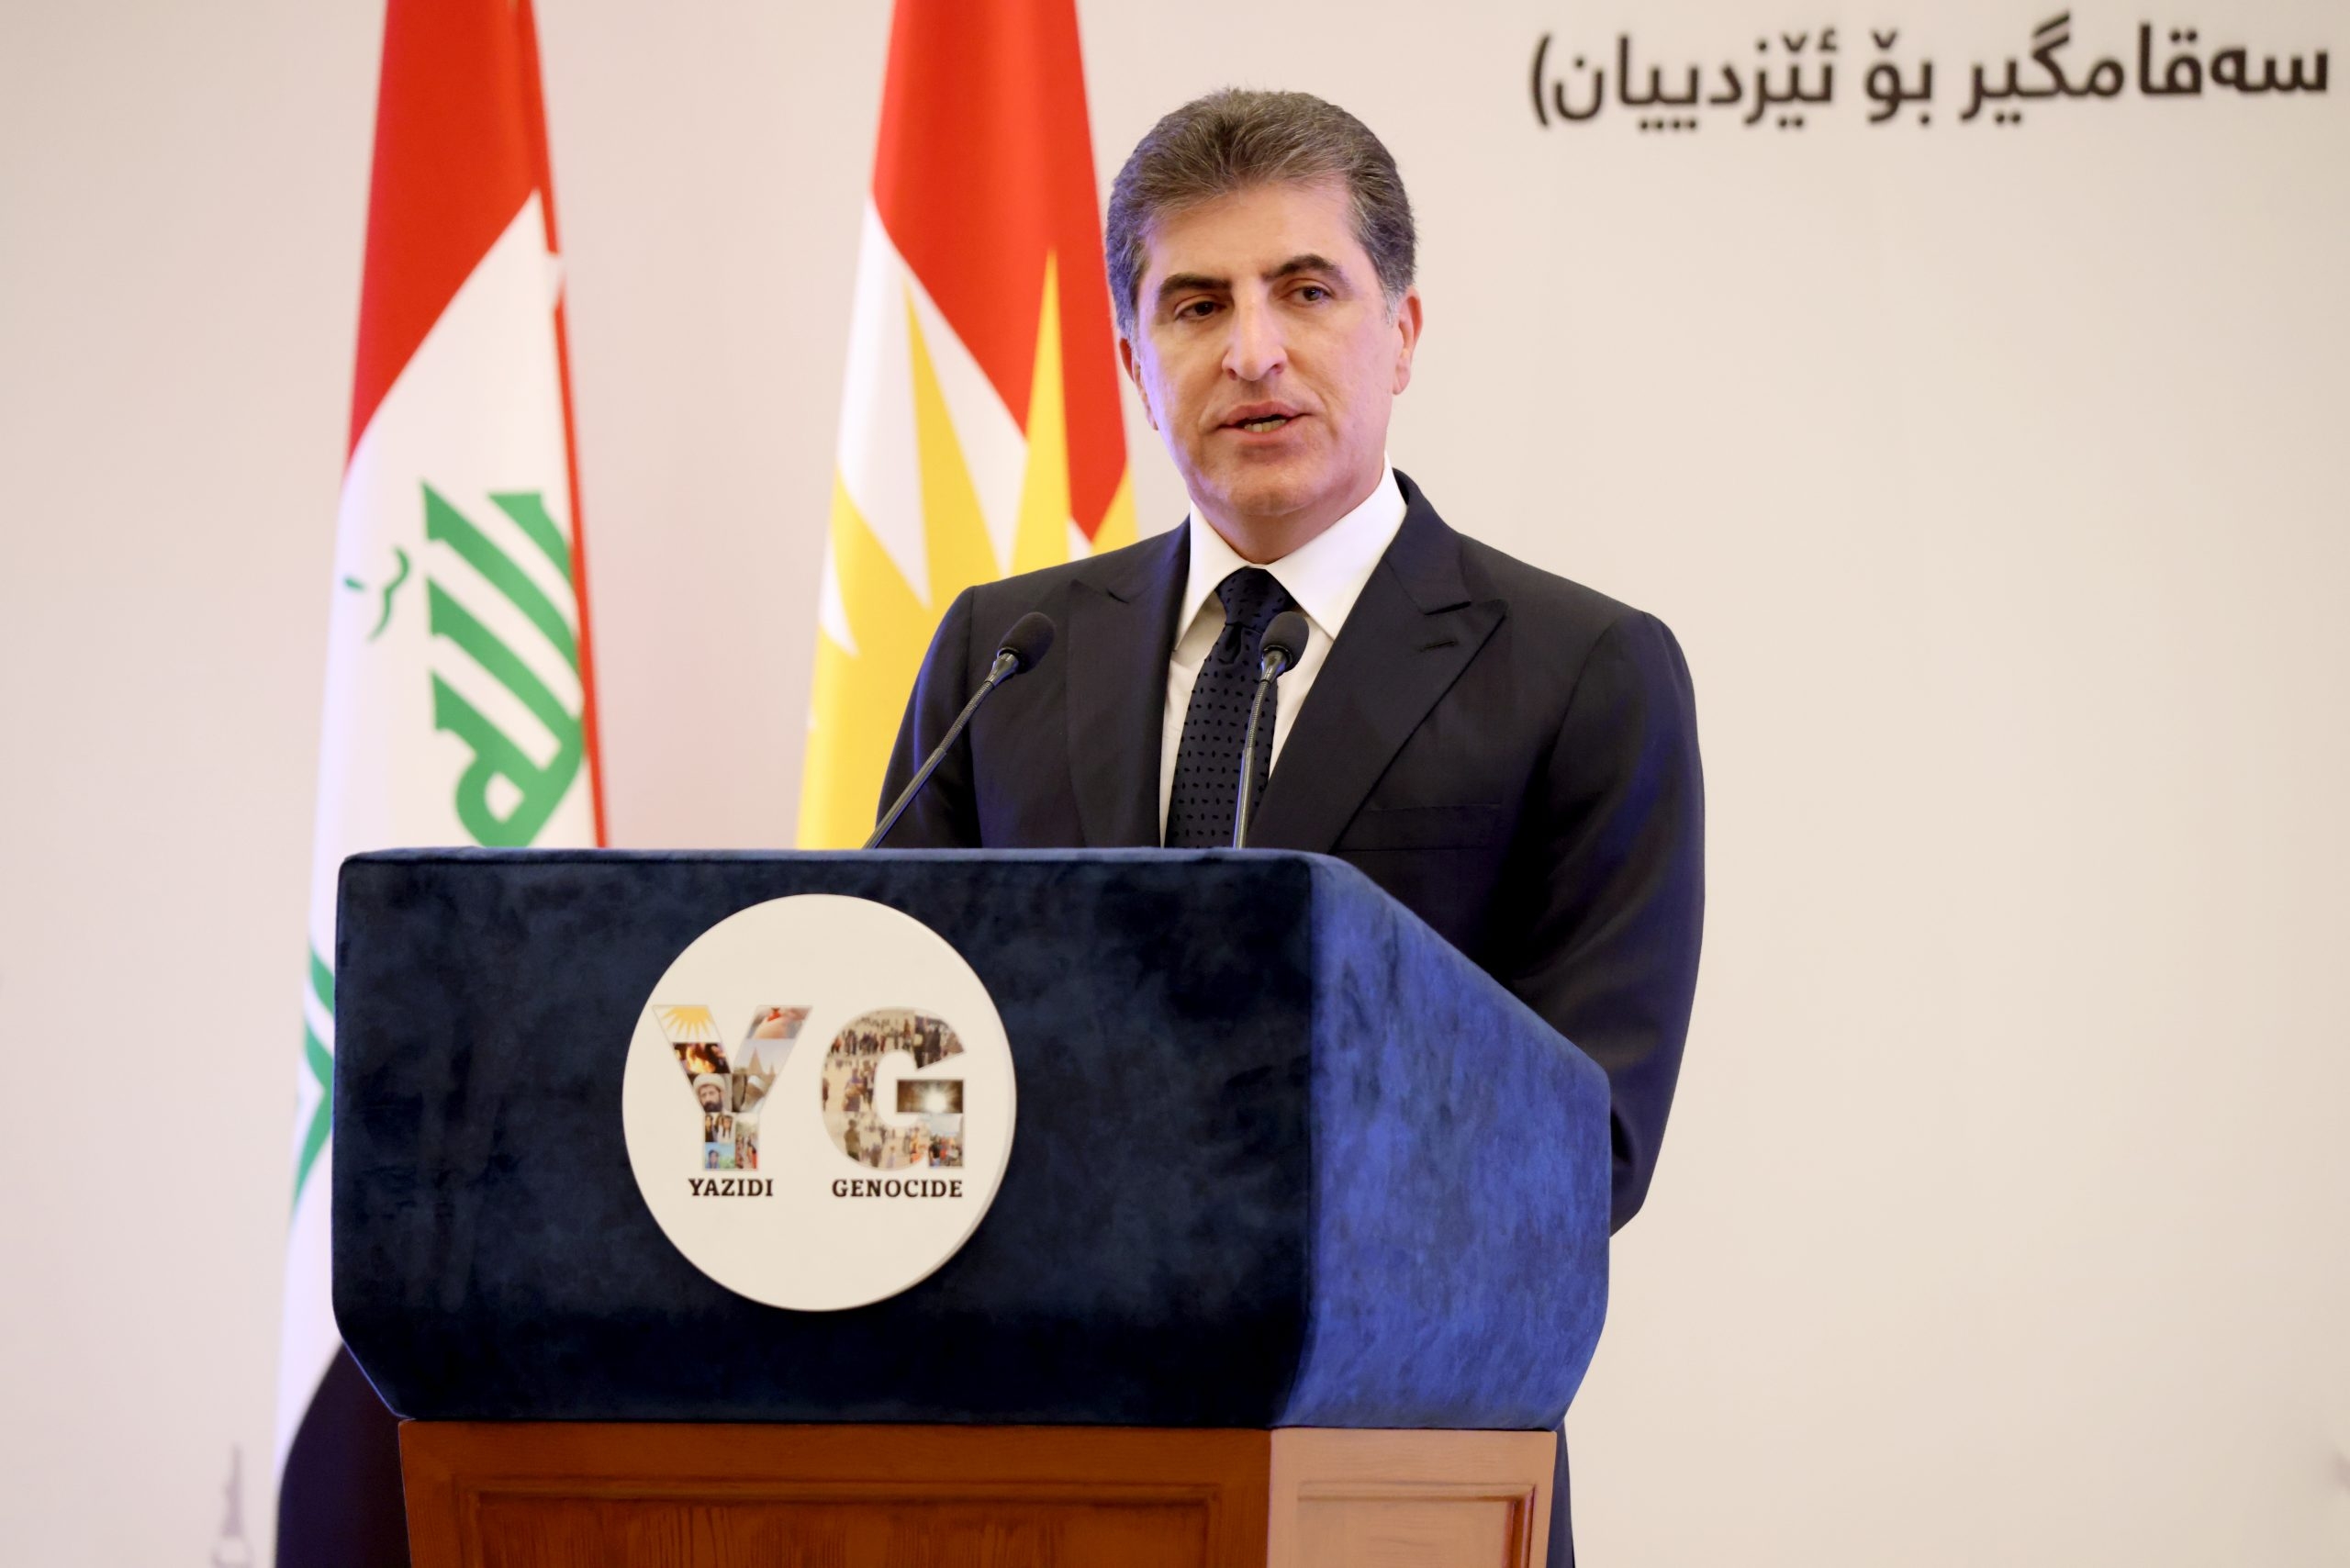 President Nechirvan Barzani Calls for Urgent Meeting to Address Sinjar Crisis